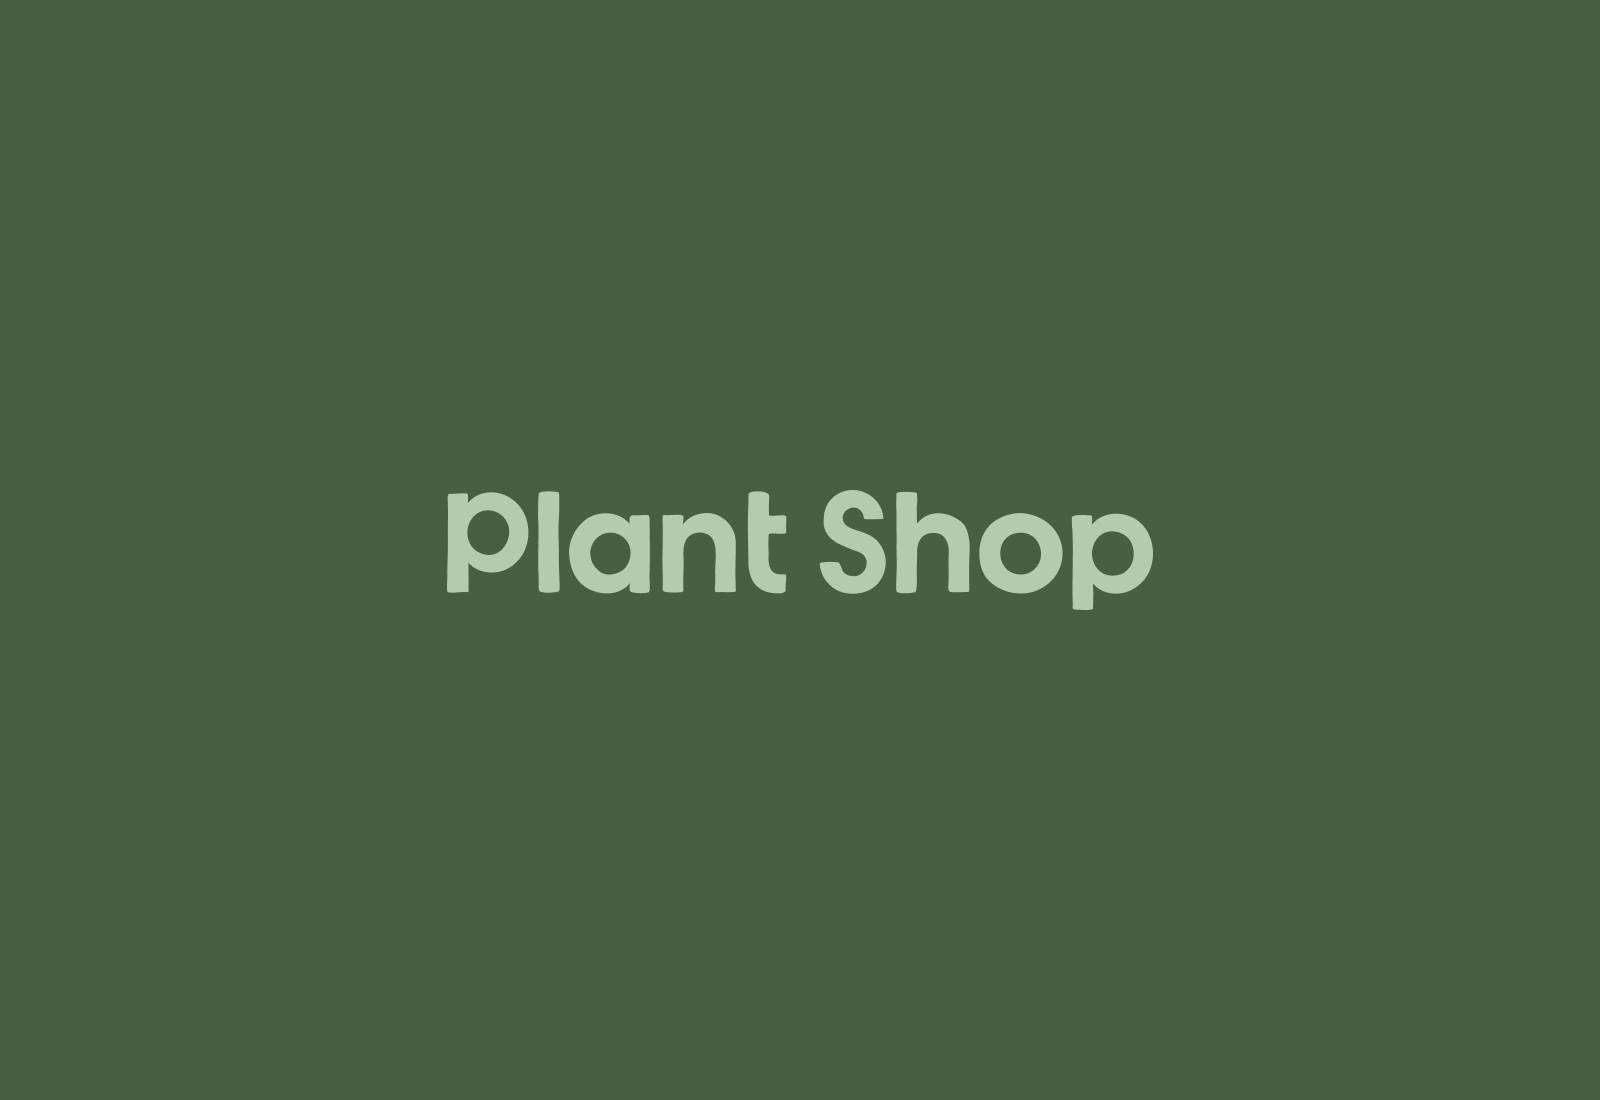 Primary Logo | Brand Identity for Plant Shop GR - Grand Rapids, MI